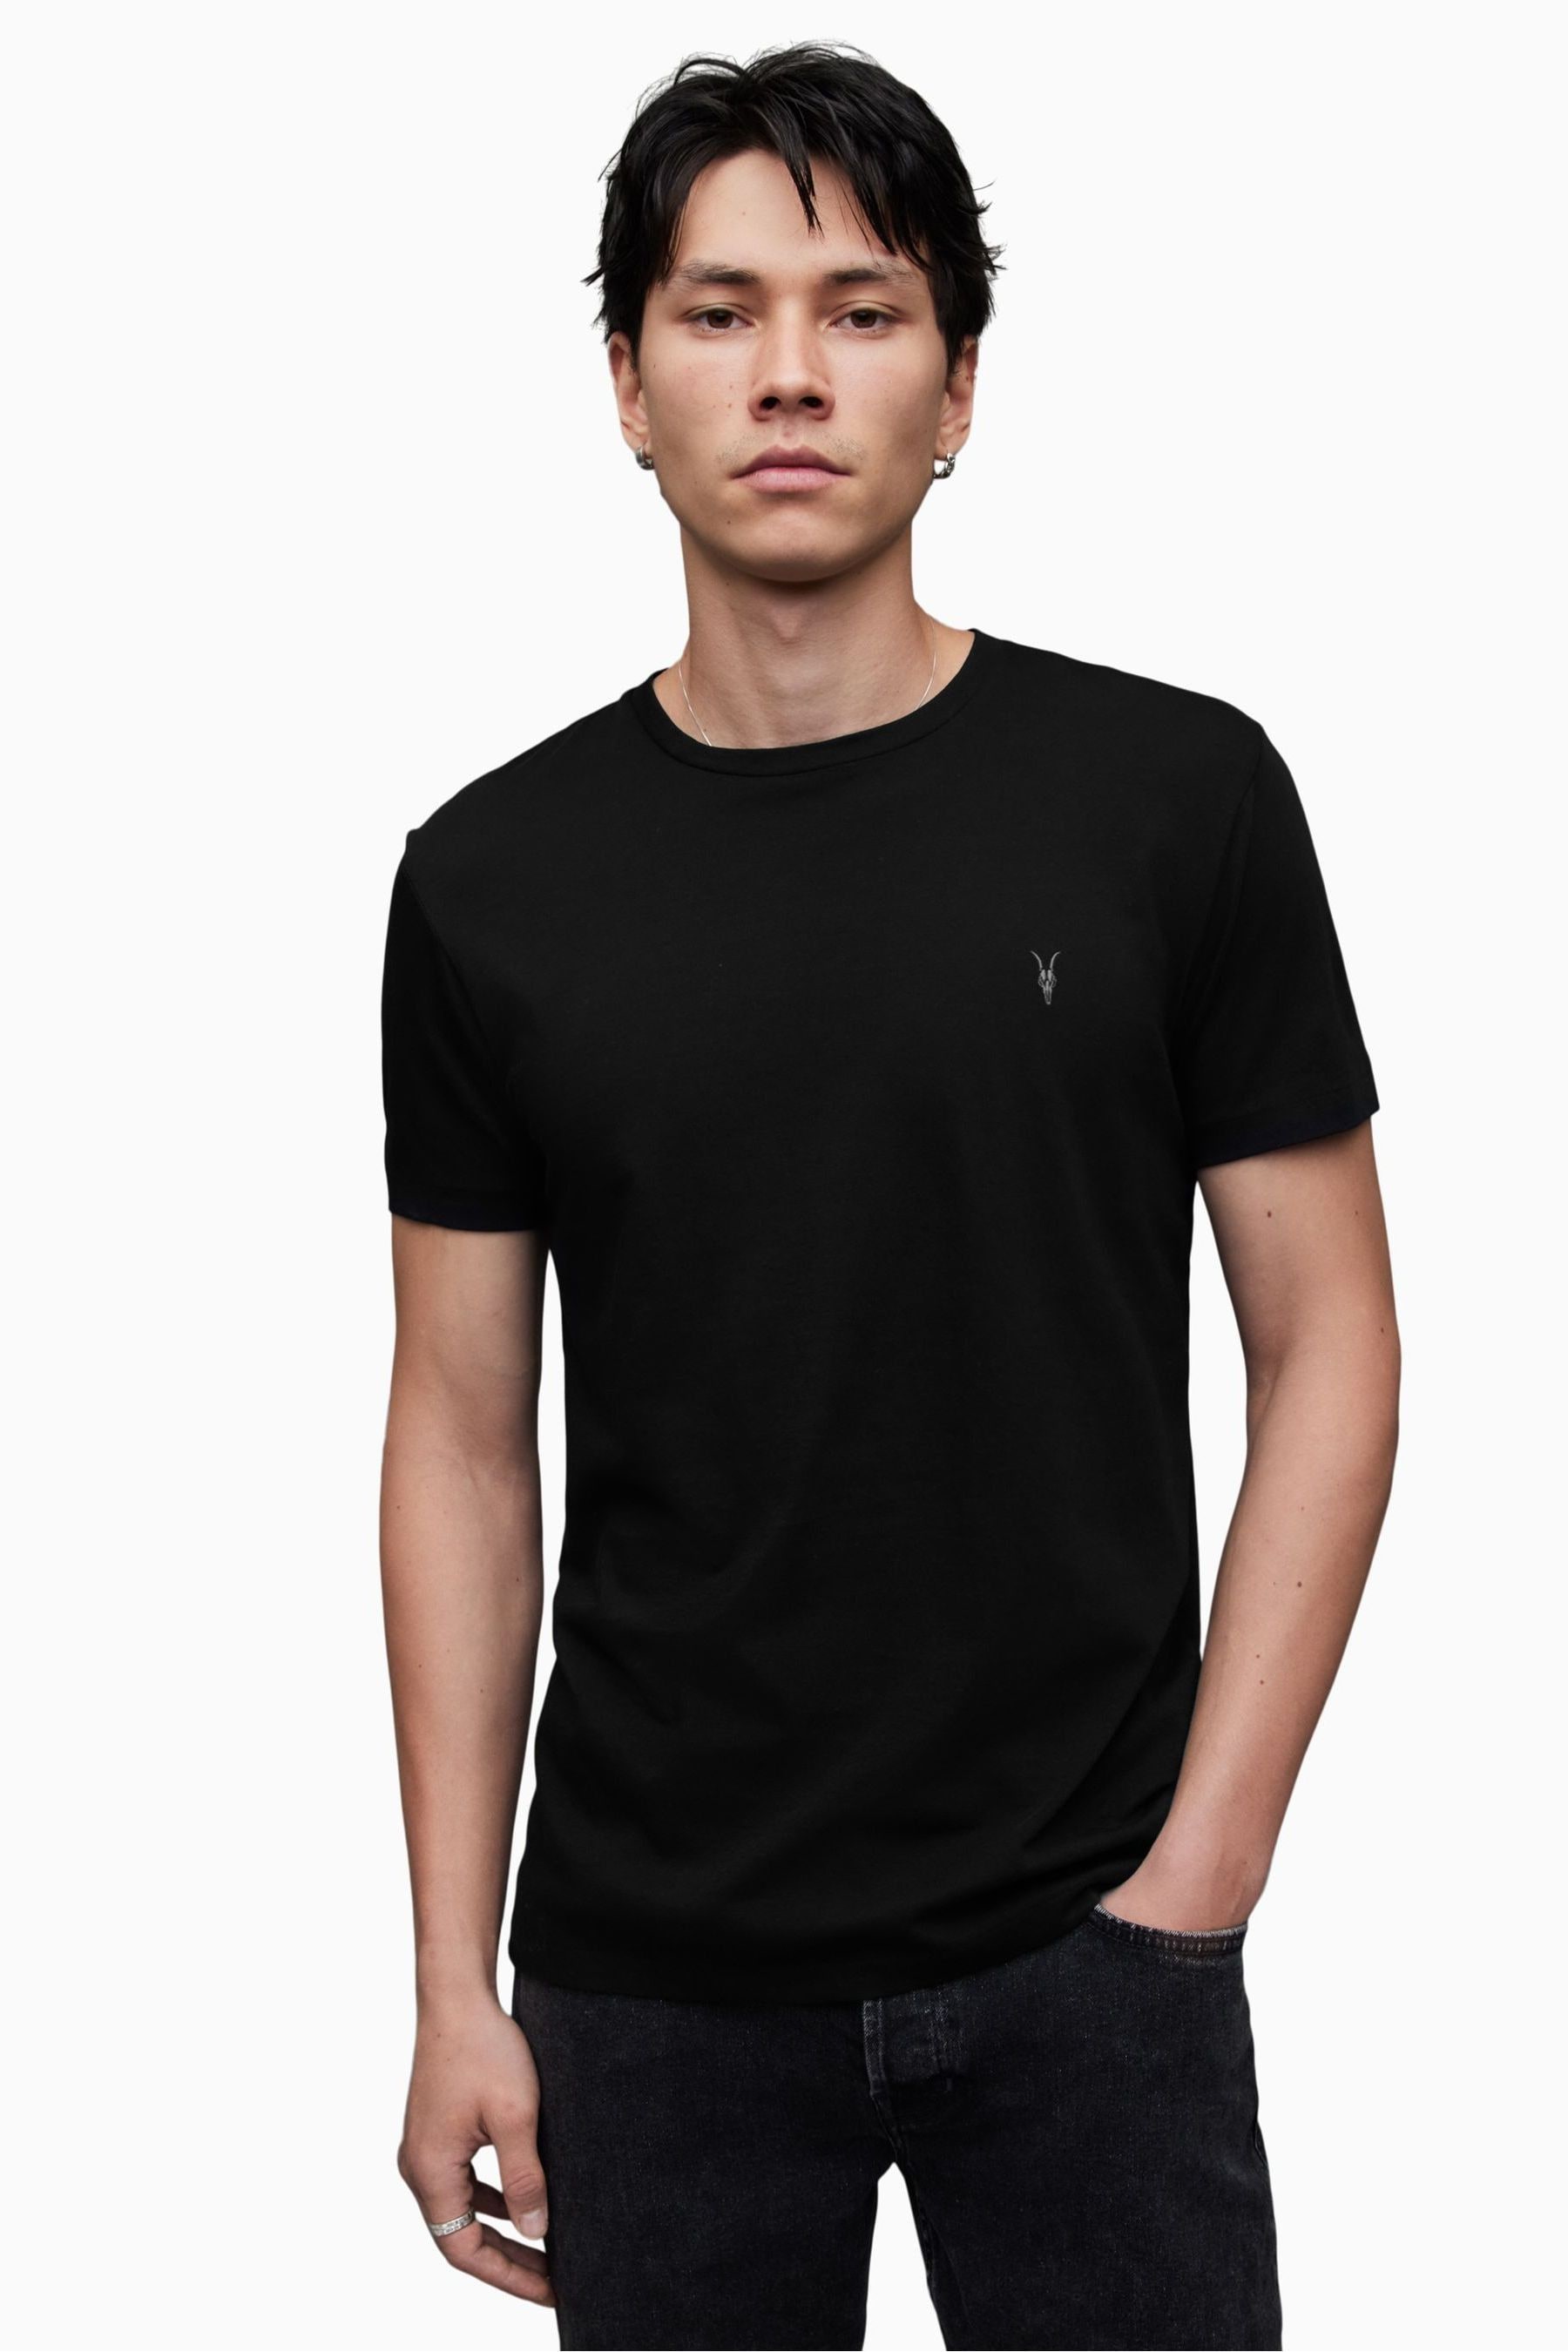 Buy AllSaints Black Tonic Crew T-Shirt from the Next UK online shop